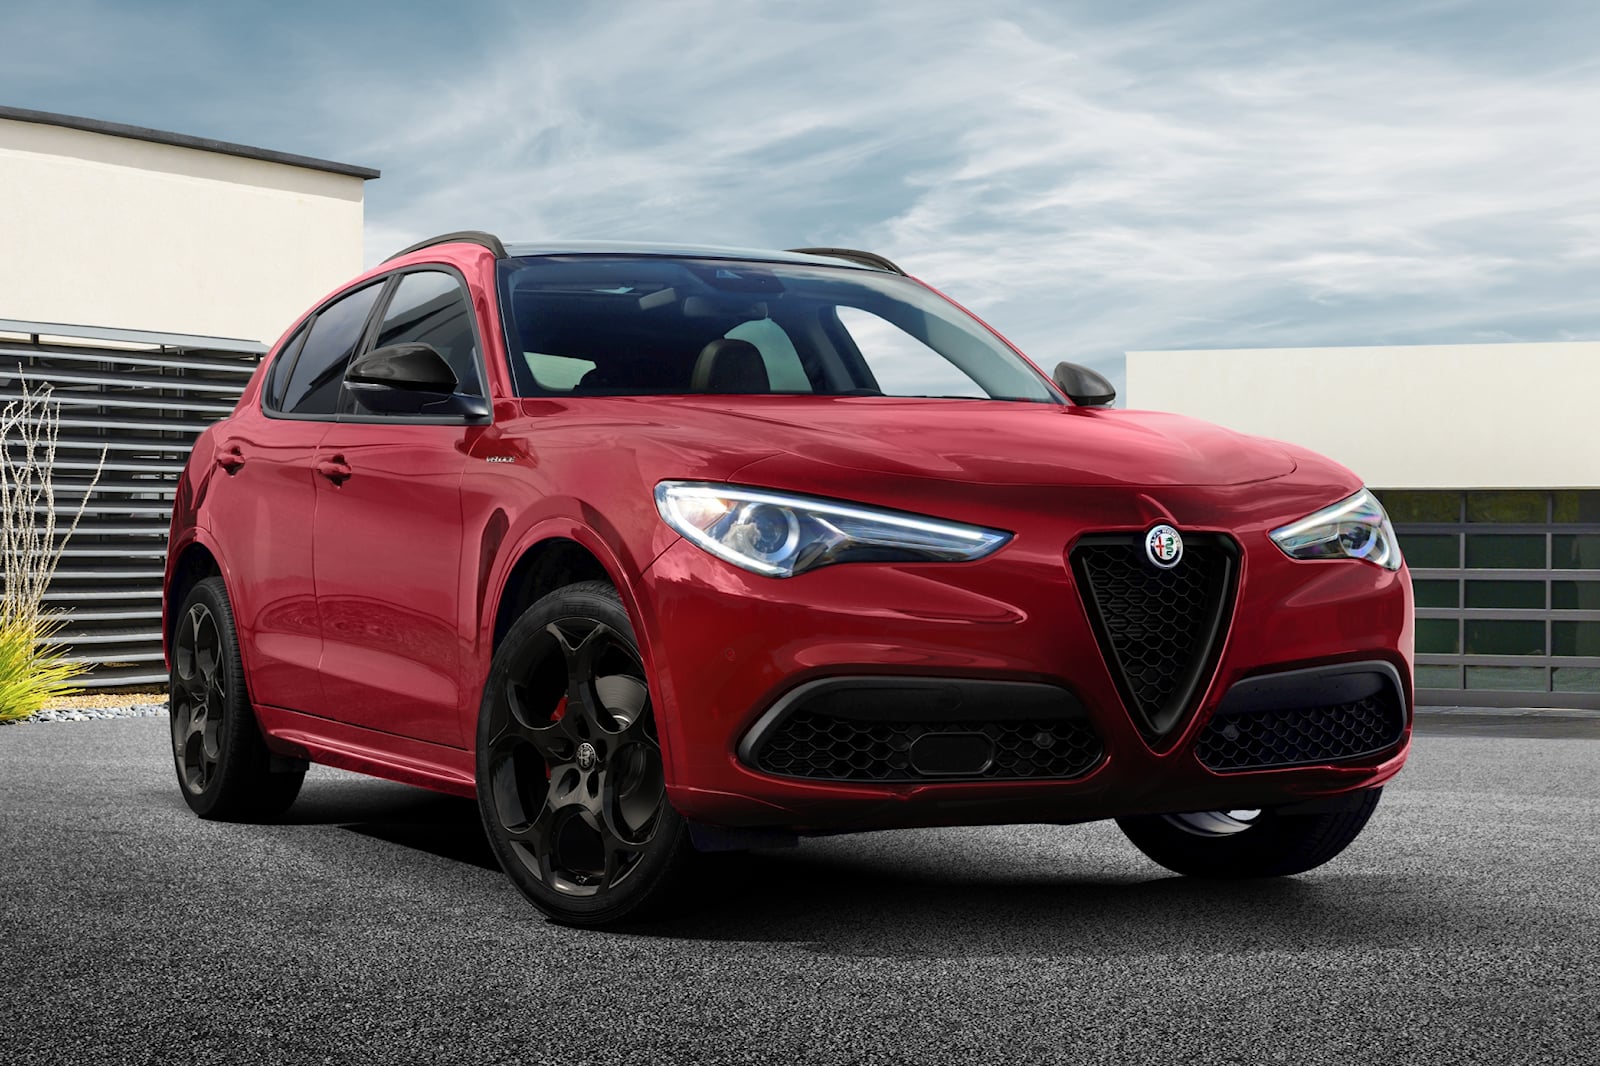 2020 Alfa Romeo Stelvio Quadrifoglio Review, Pricing, and Specs